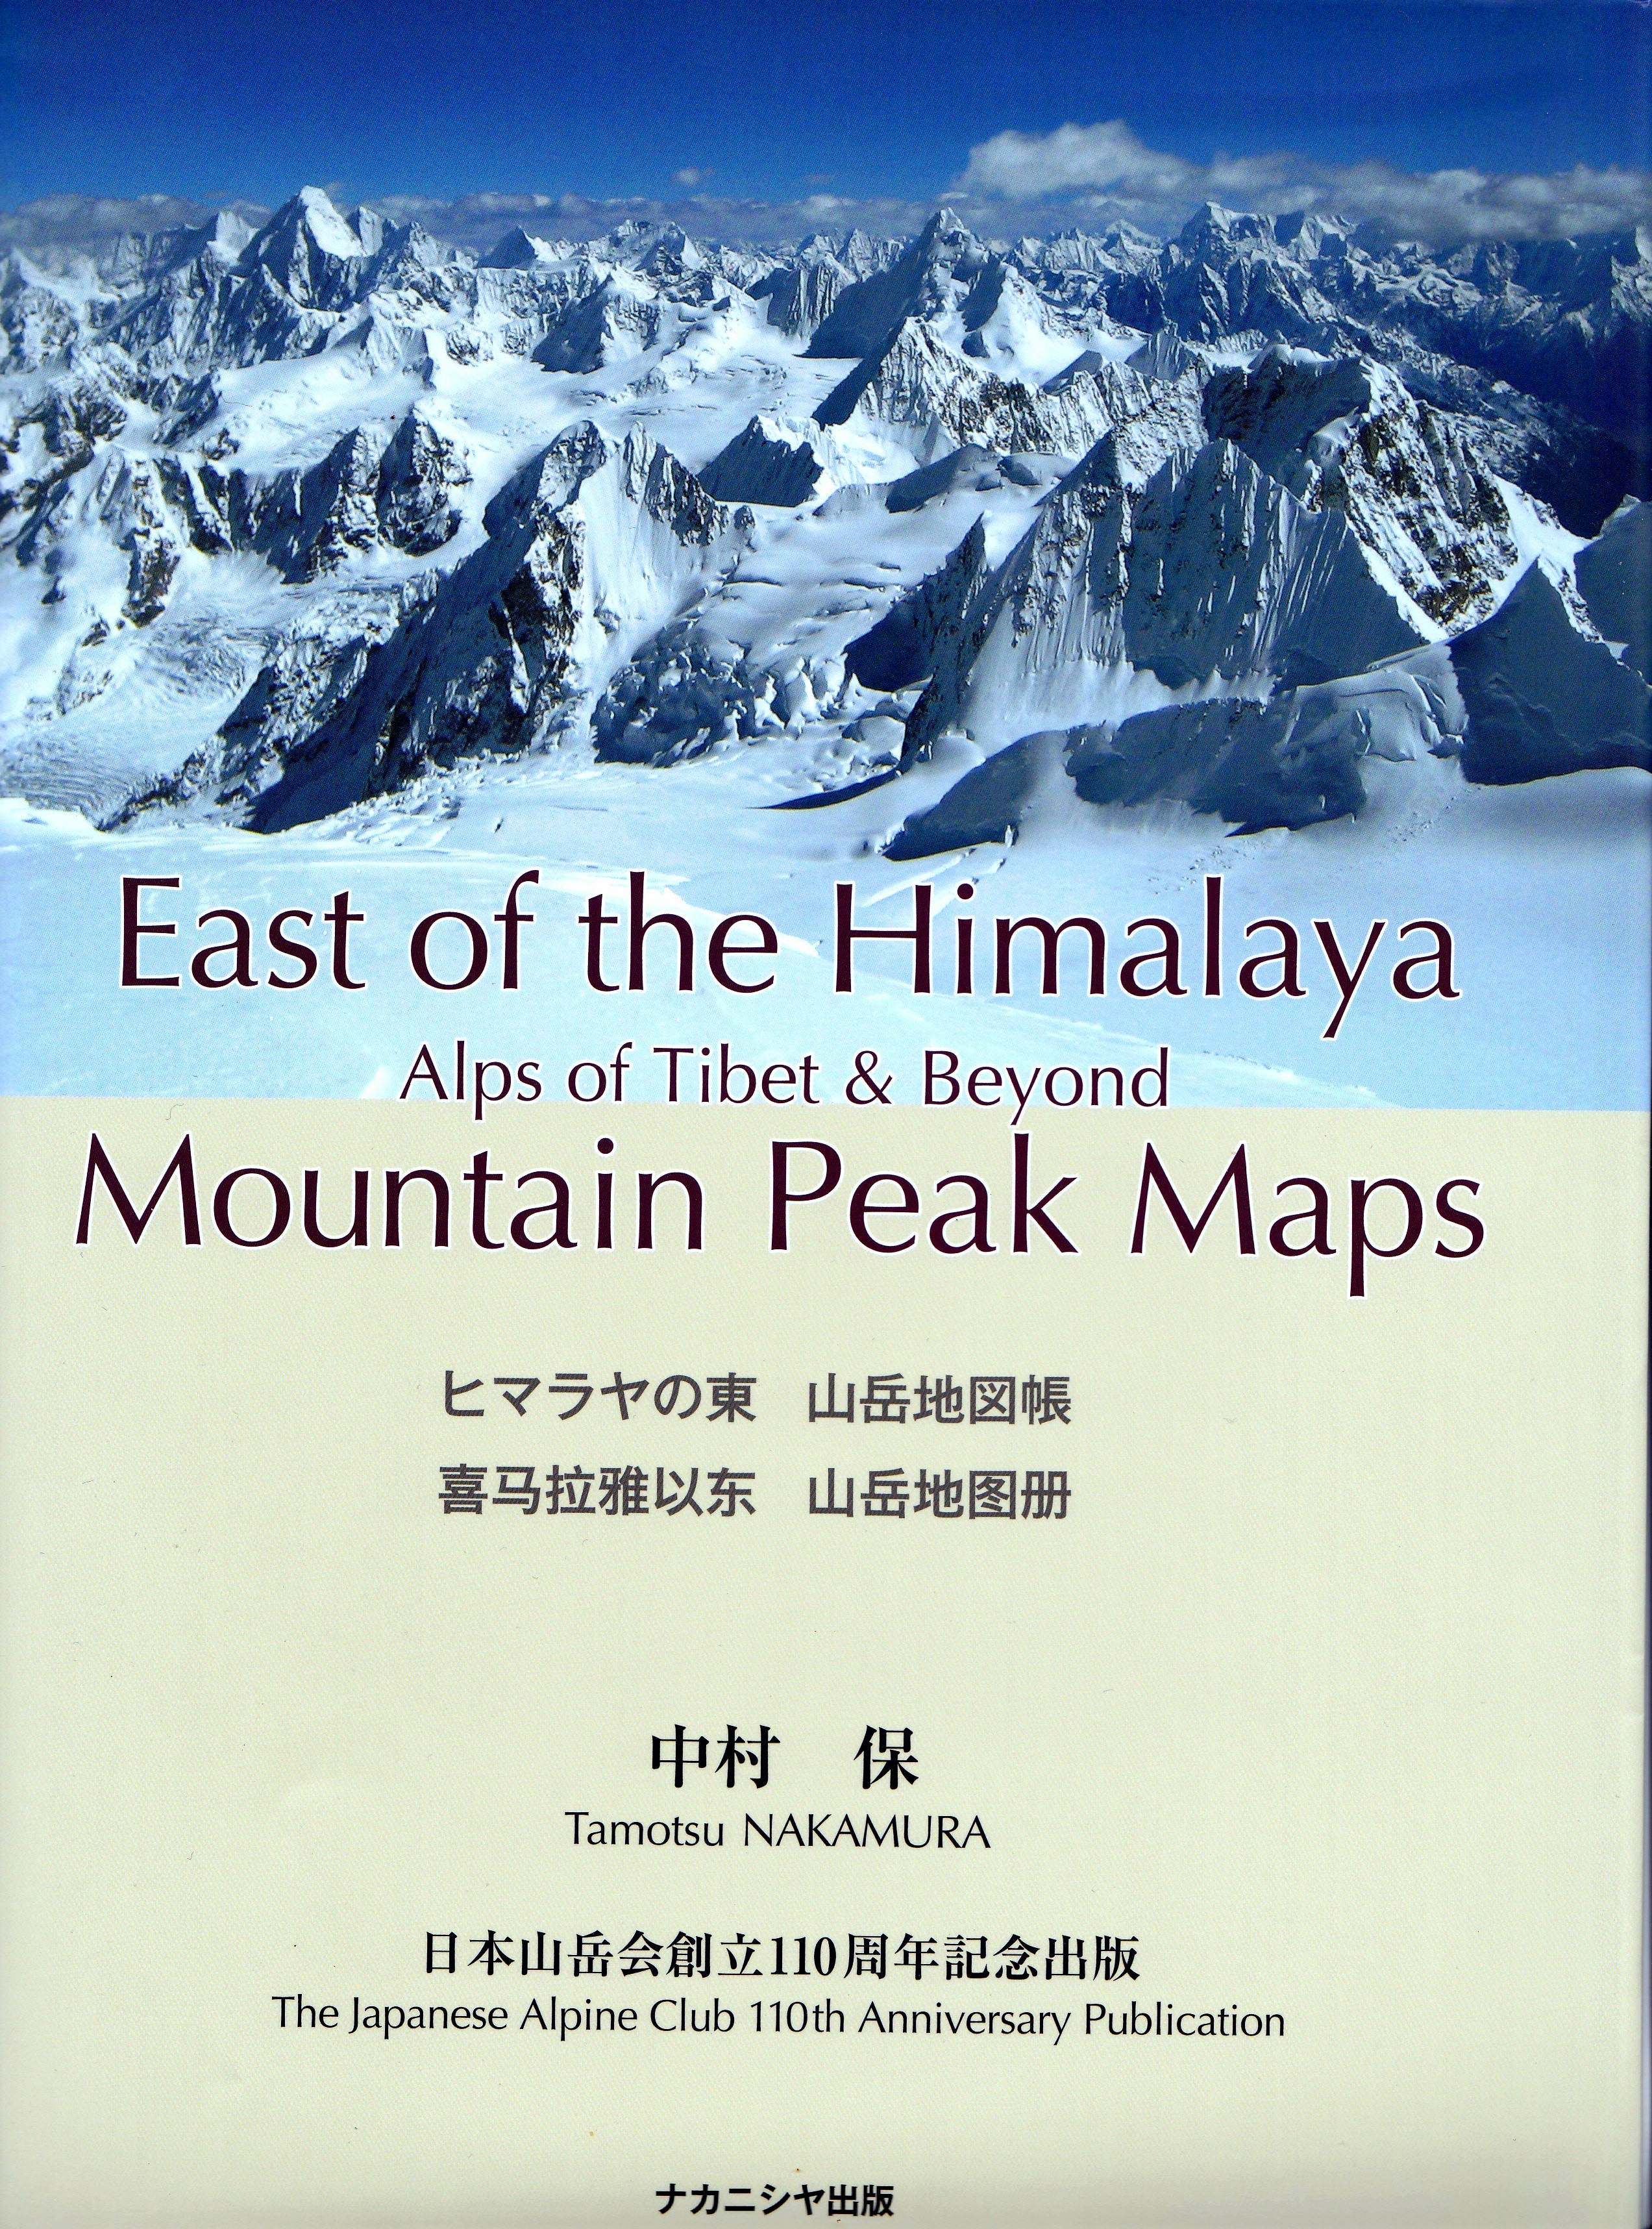 East of the Himalaya; Alps of Tibet and Beyond, Mountain Peak Maps can be ordered by emailing ibd@kinokuniya.co.jp.